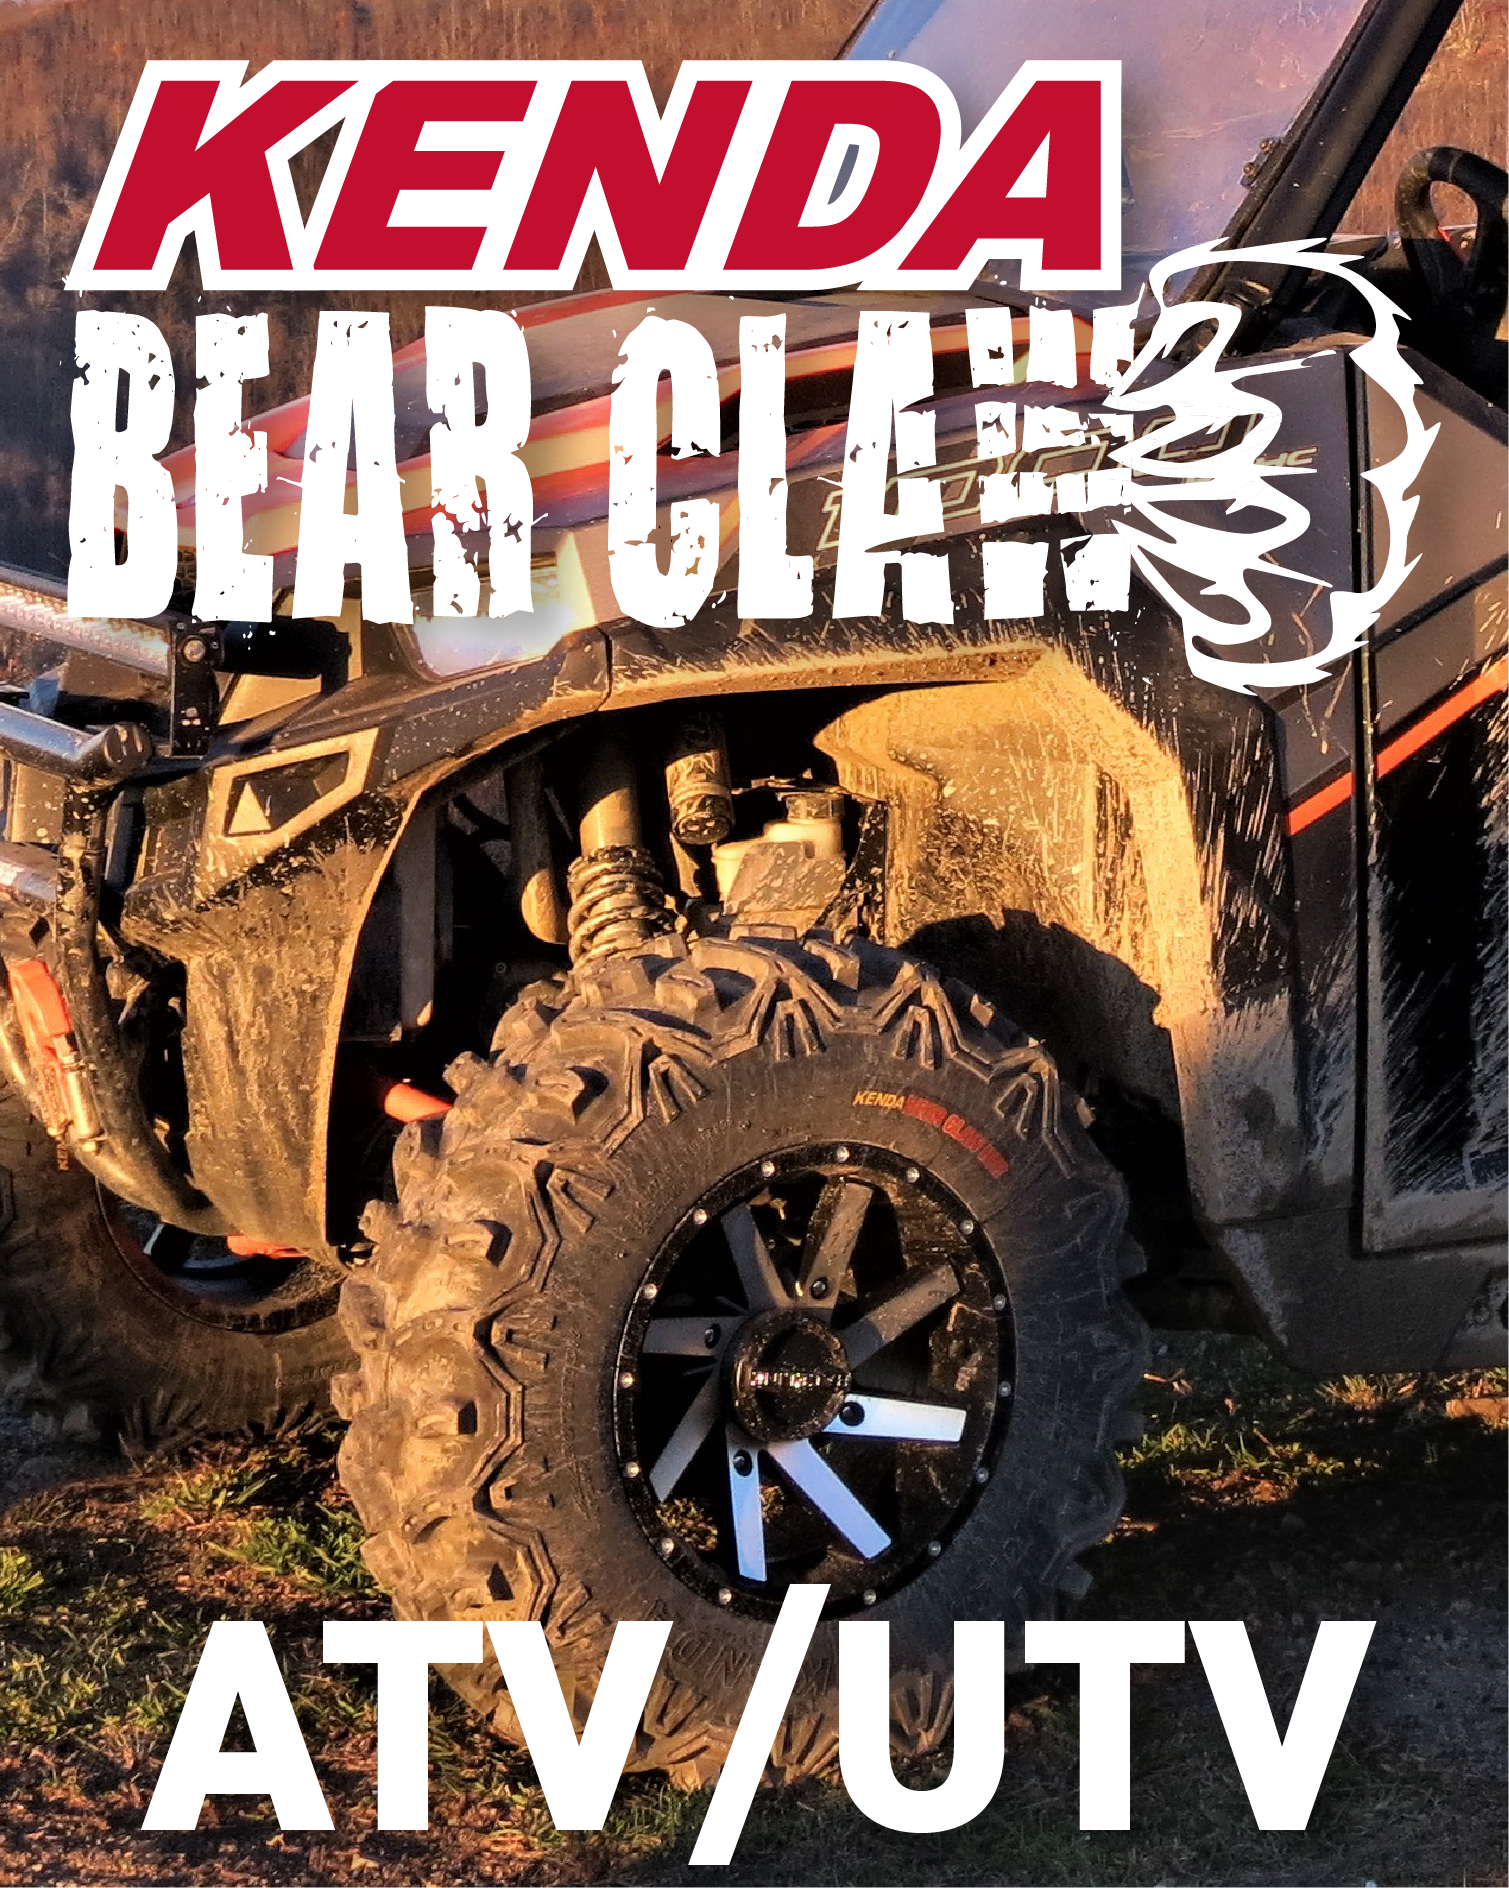 Kenda Bear Claw EX 25x10-12 Rear ATV 6 PLY Tires Bearclaw 25x10x12 - 2 Pack